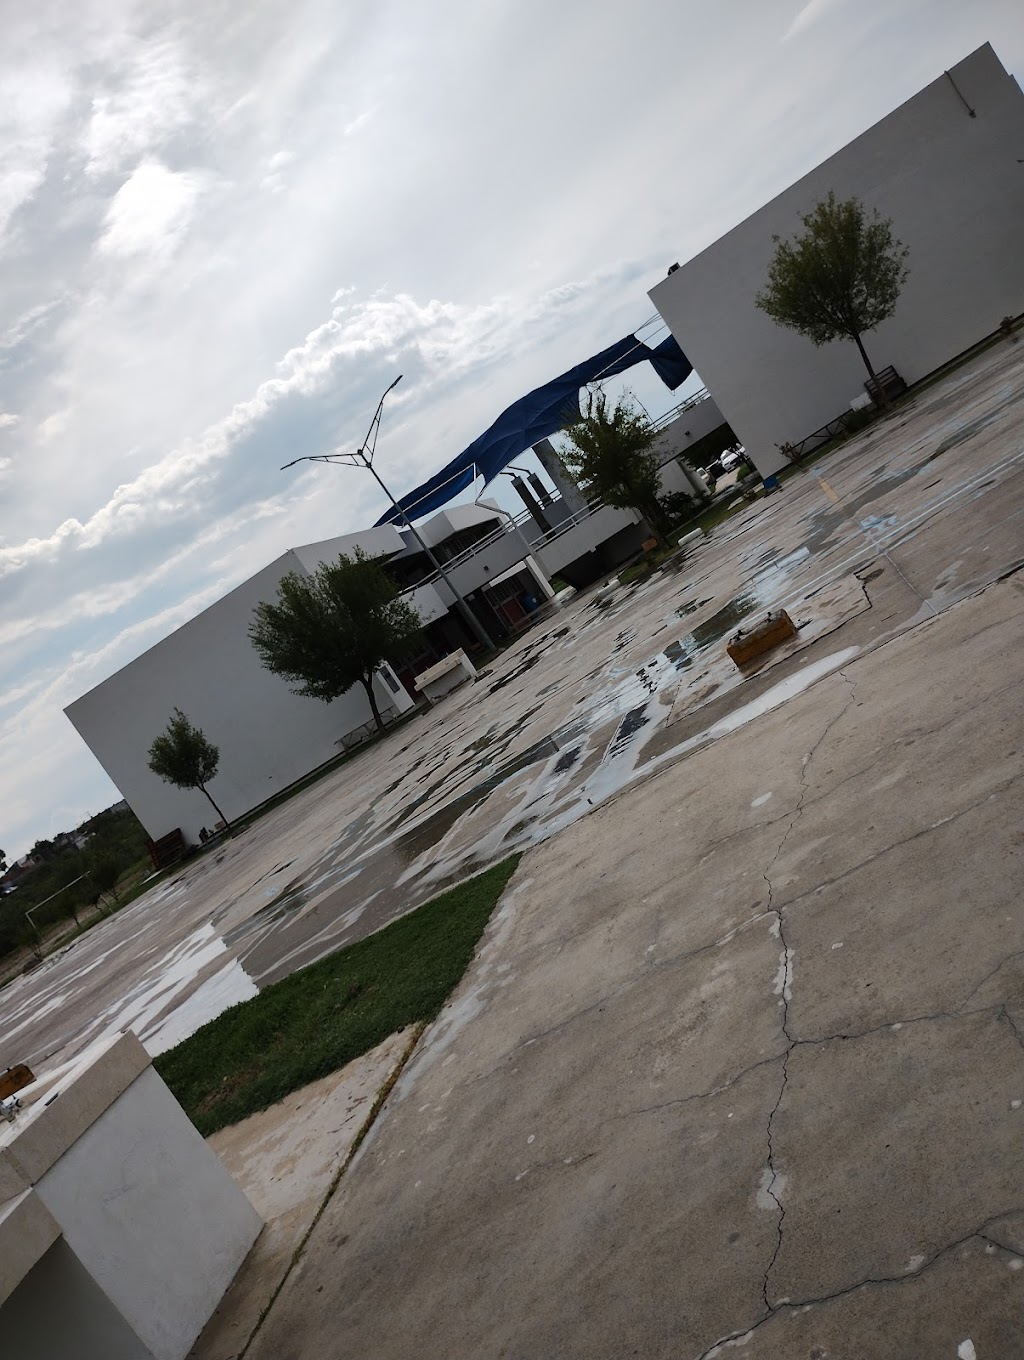 Preparatoria Municipal De Nuevo Laredo "Elena Poniatowska” | San Andrés, 88144 Nuevo Laredo, Tamps., Mexico | Phone: 867 101 4154